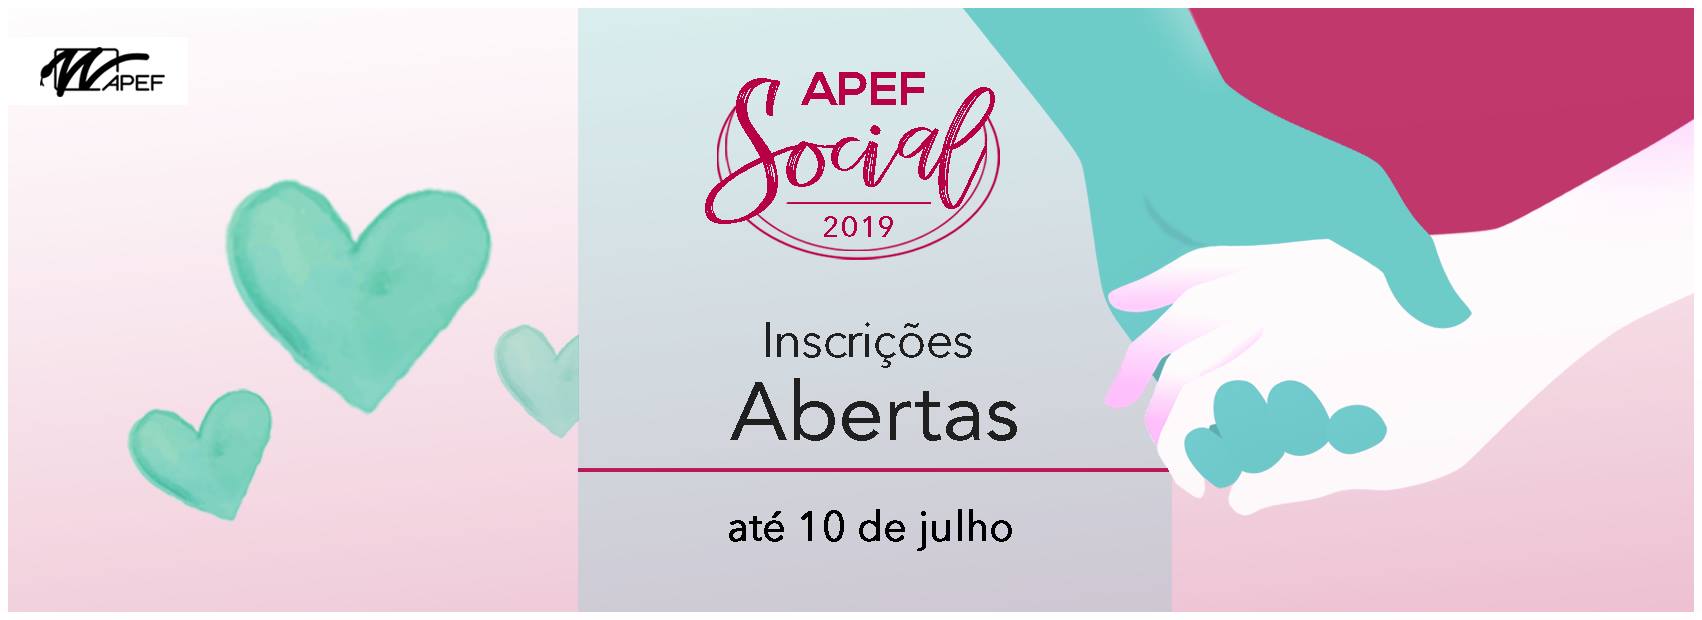 APEF Social 2019